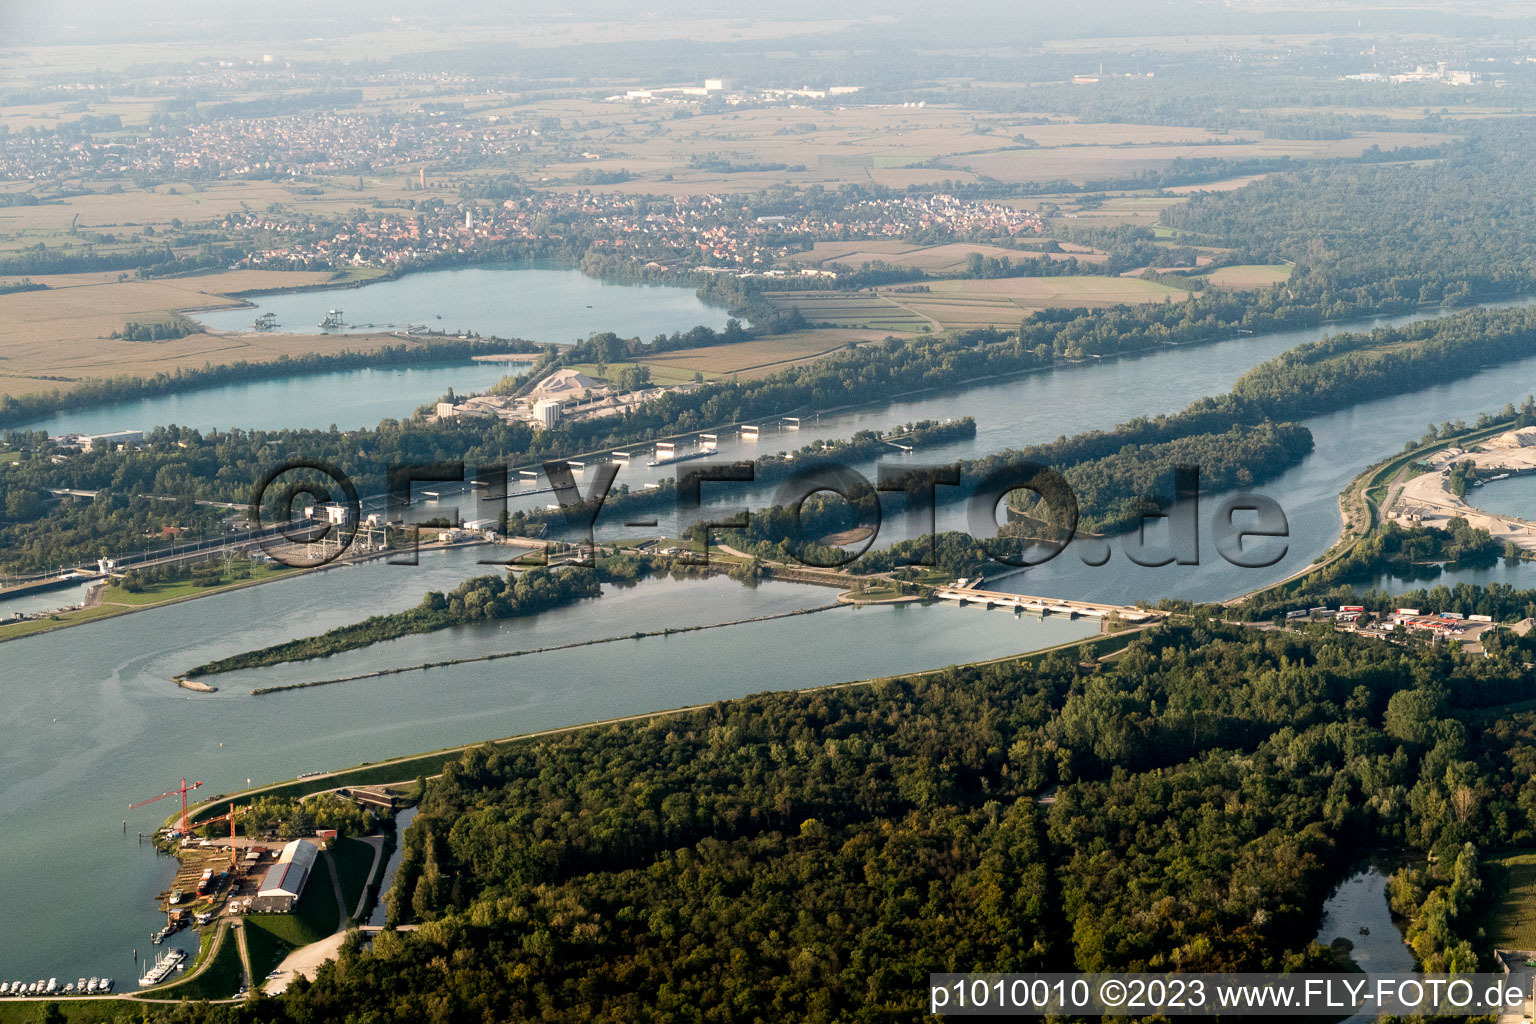 Aerial view of Lock near Gambsheim in the district Freistett in Rheinau in the state Baden-Wuerttemberg, Germany